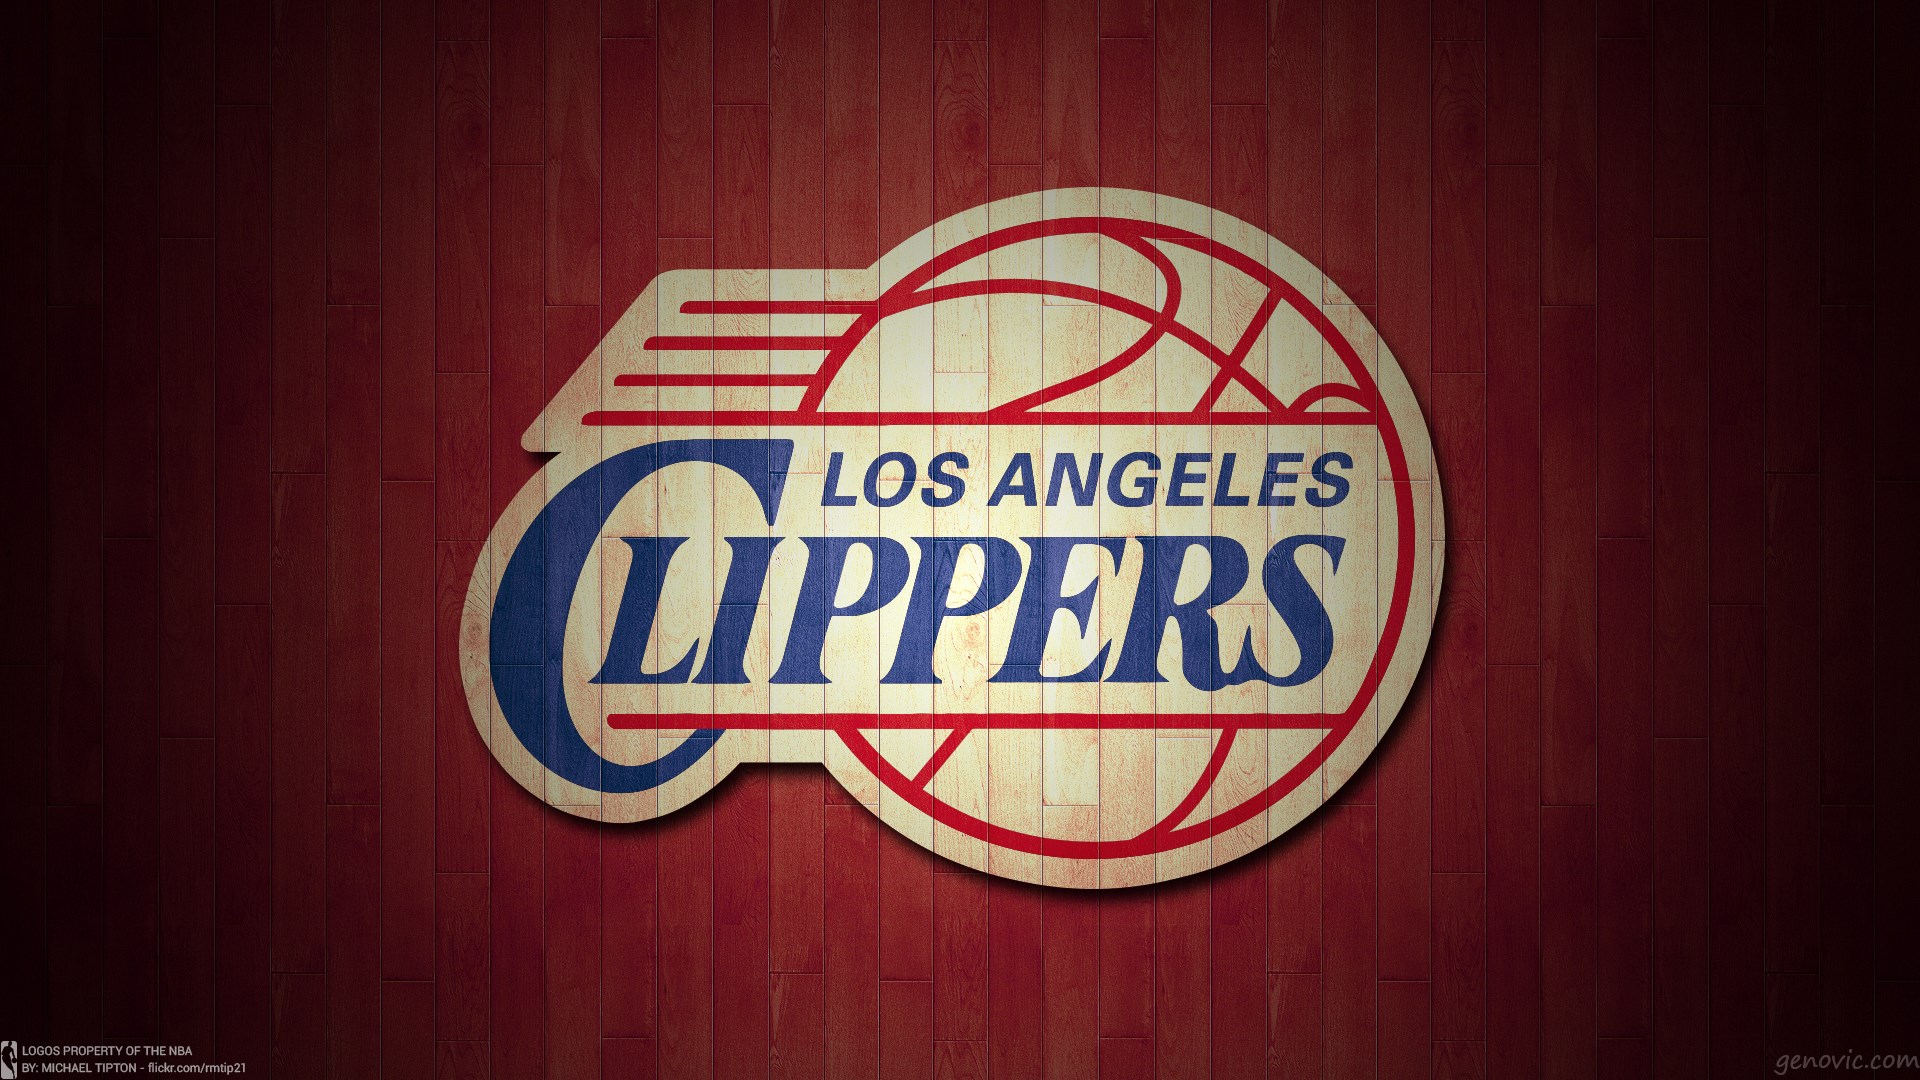 LOS ANGELES CLIPPERS Basketball Nba logo wallpaper Wallpaper